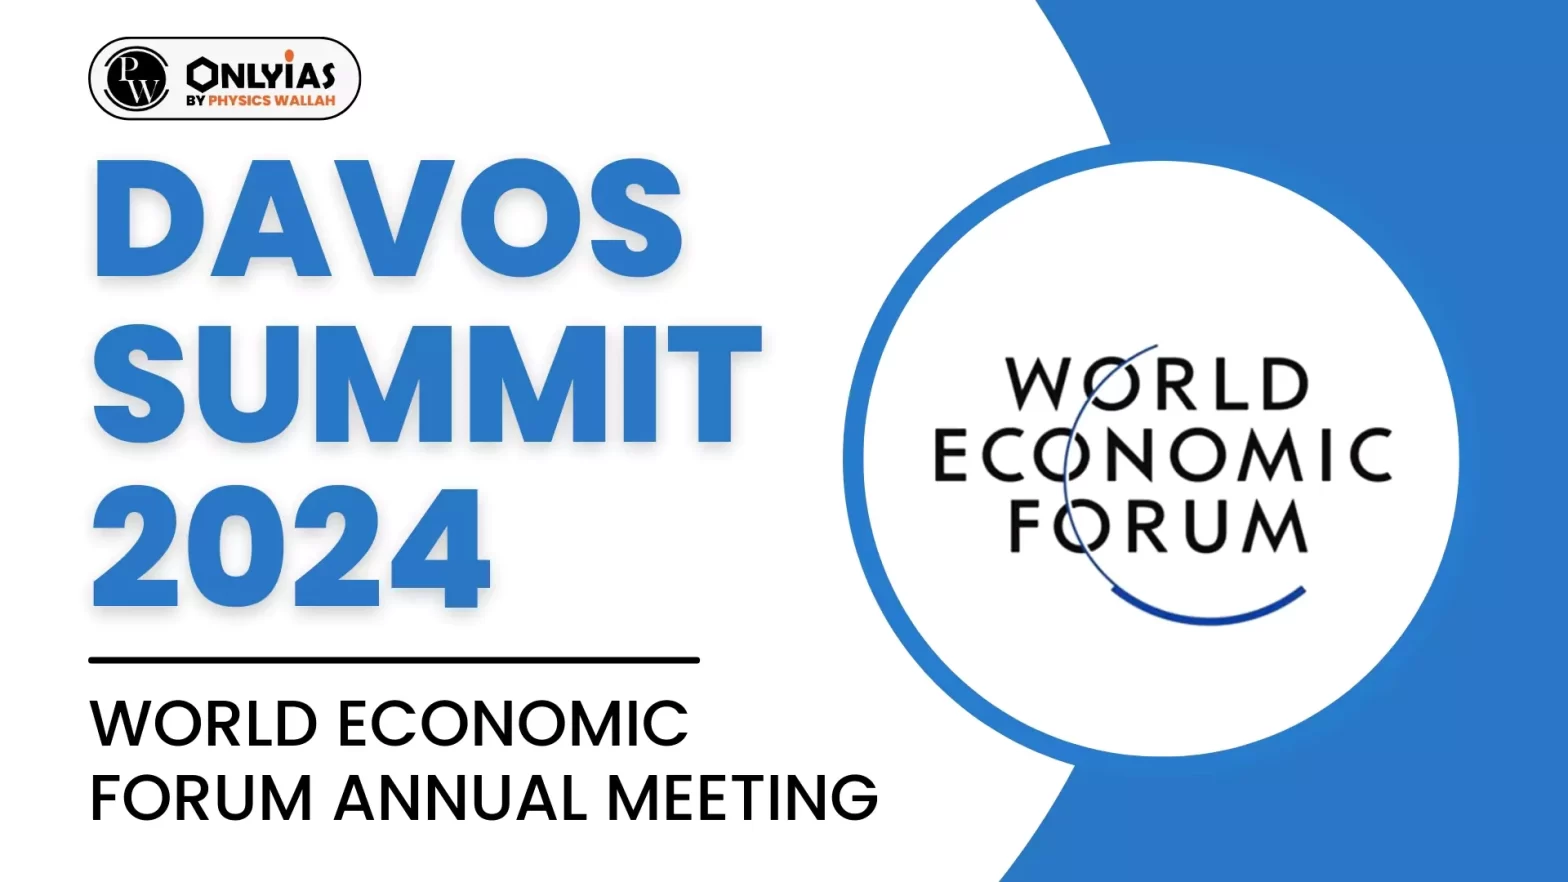 Davos Summit 2024: World Economic Forum Annual Meeting